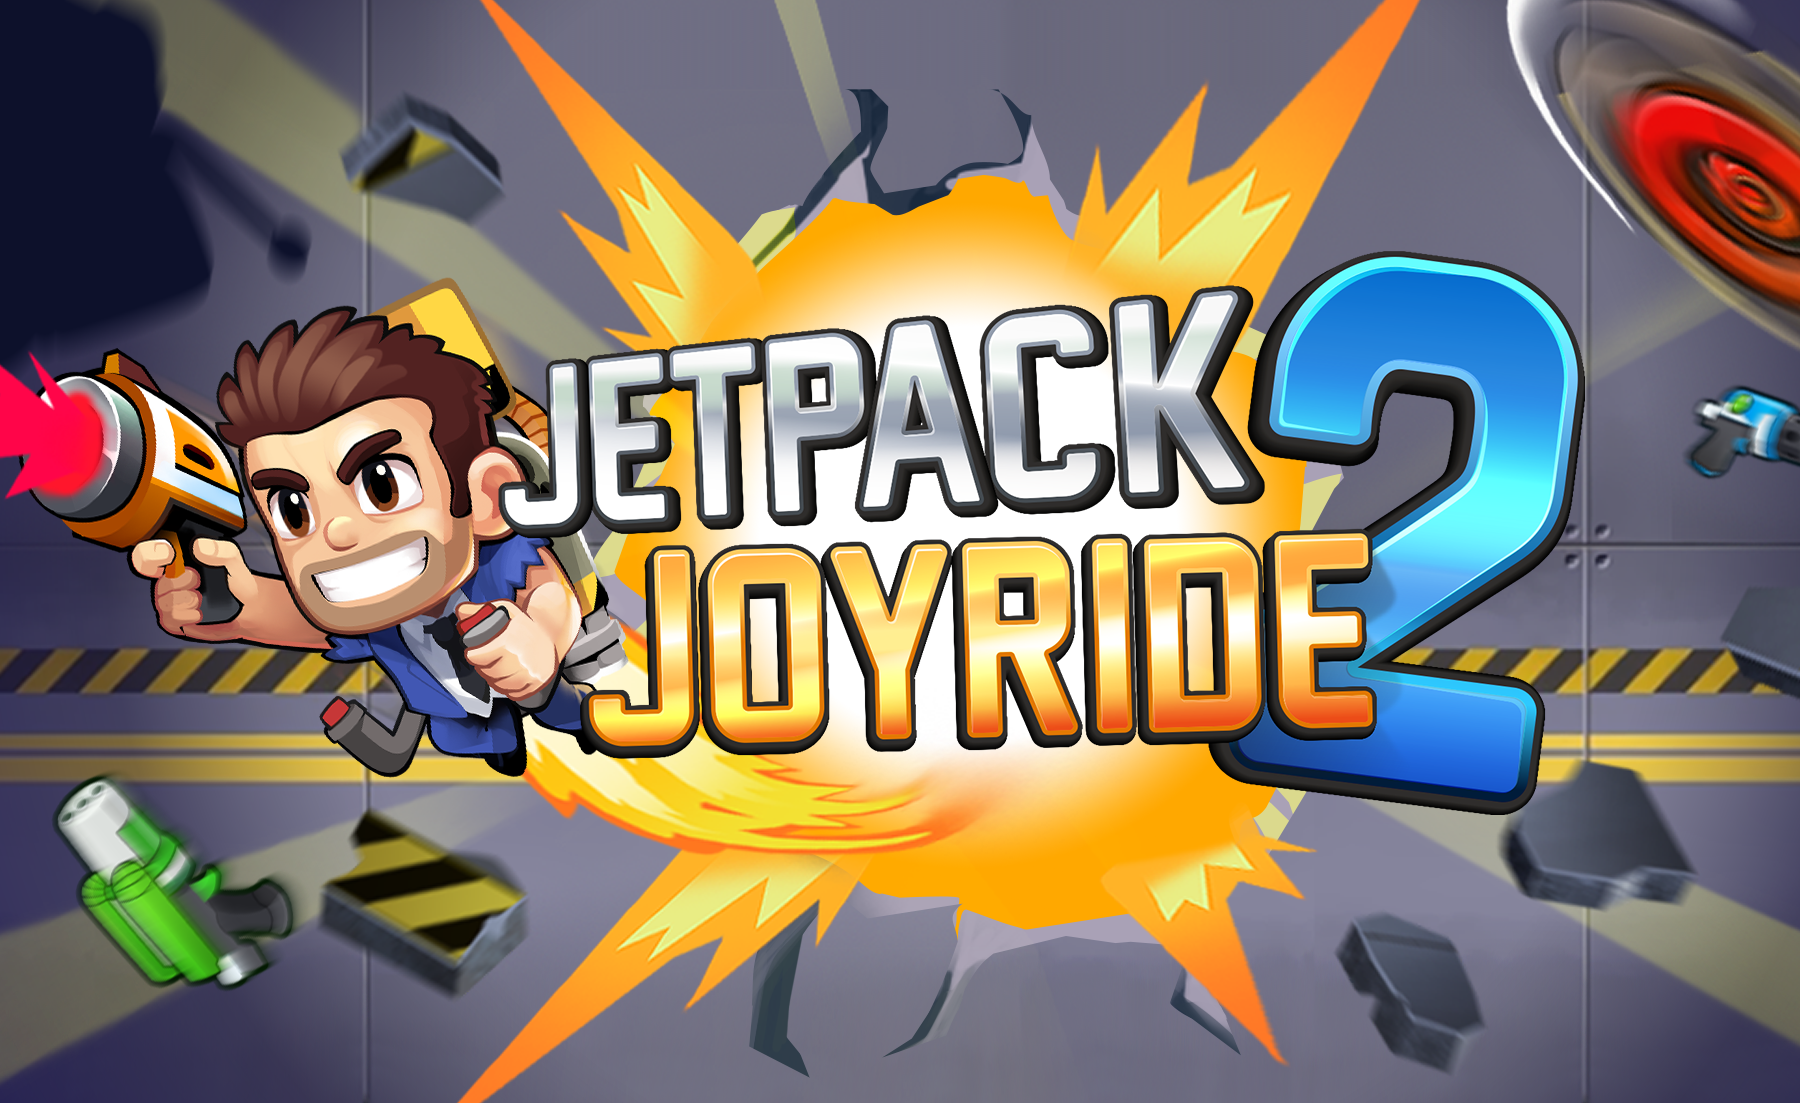 jetpack joyride 2 game free